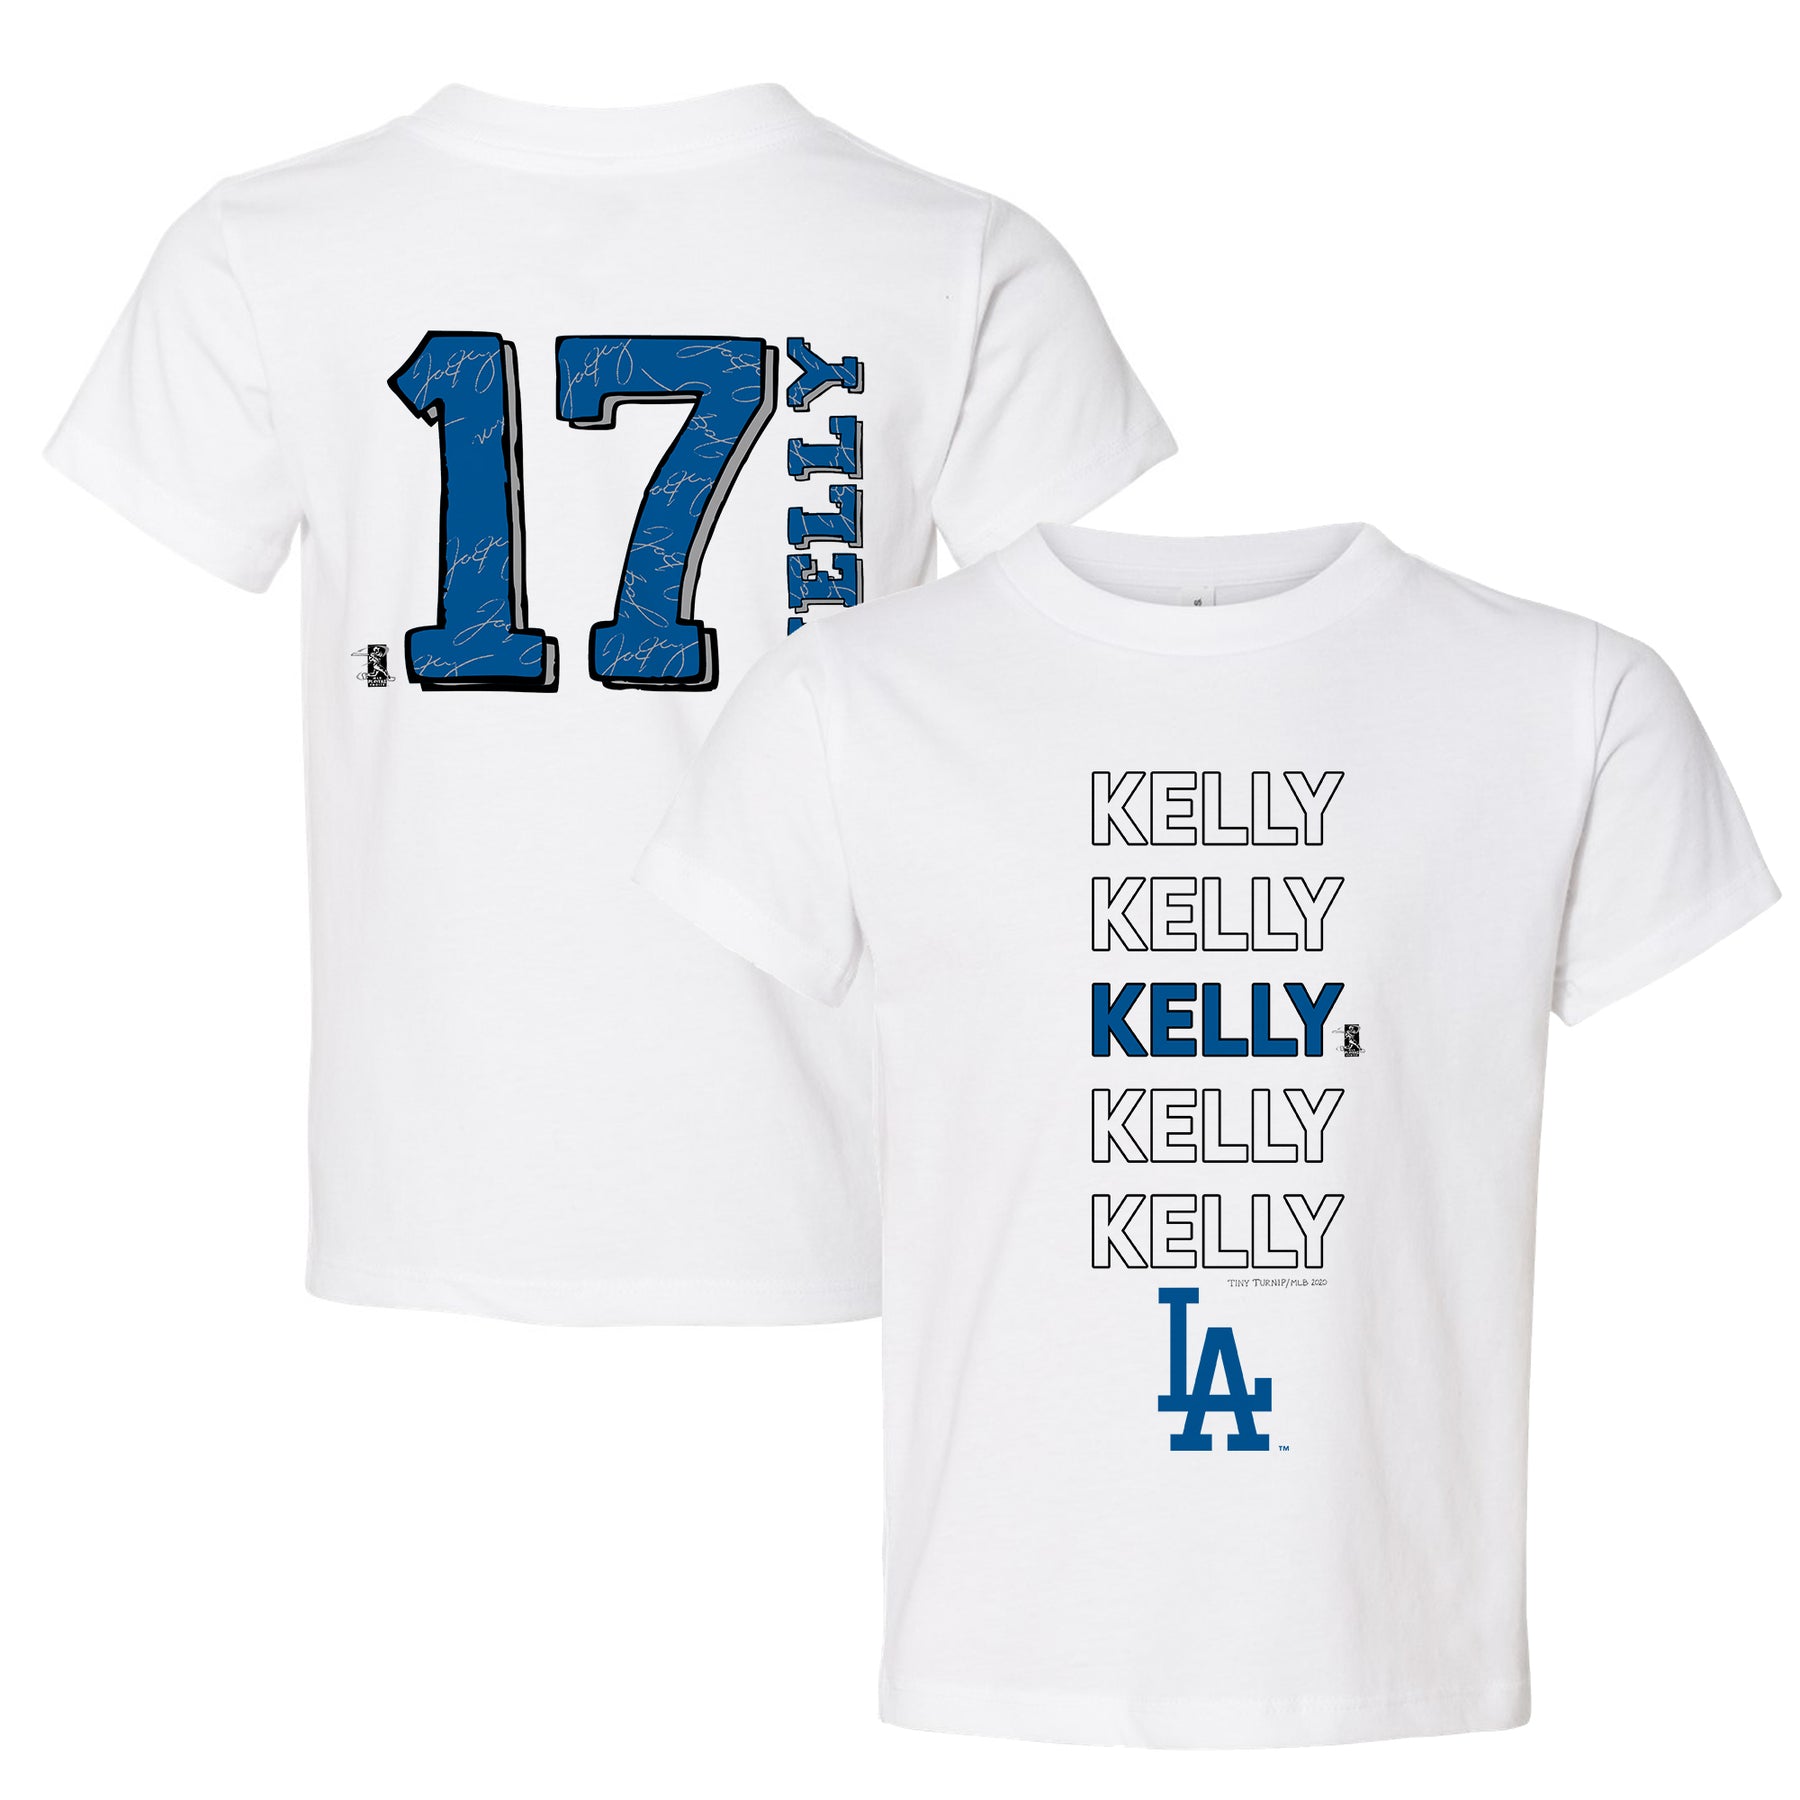 Women's Tiny Turnip White Los Angeles Dodgers Kate The Catcher T-Shirt Size: Medium